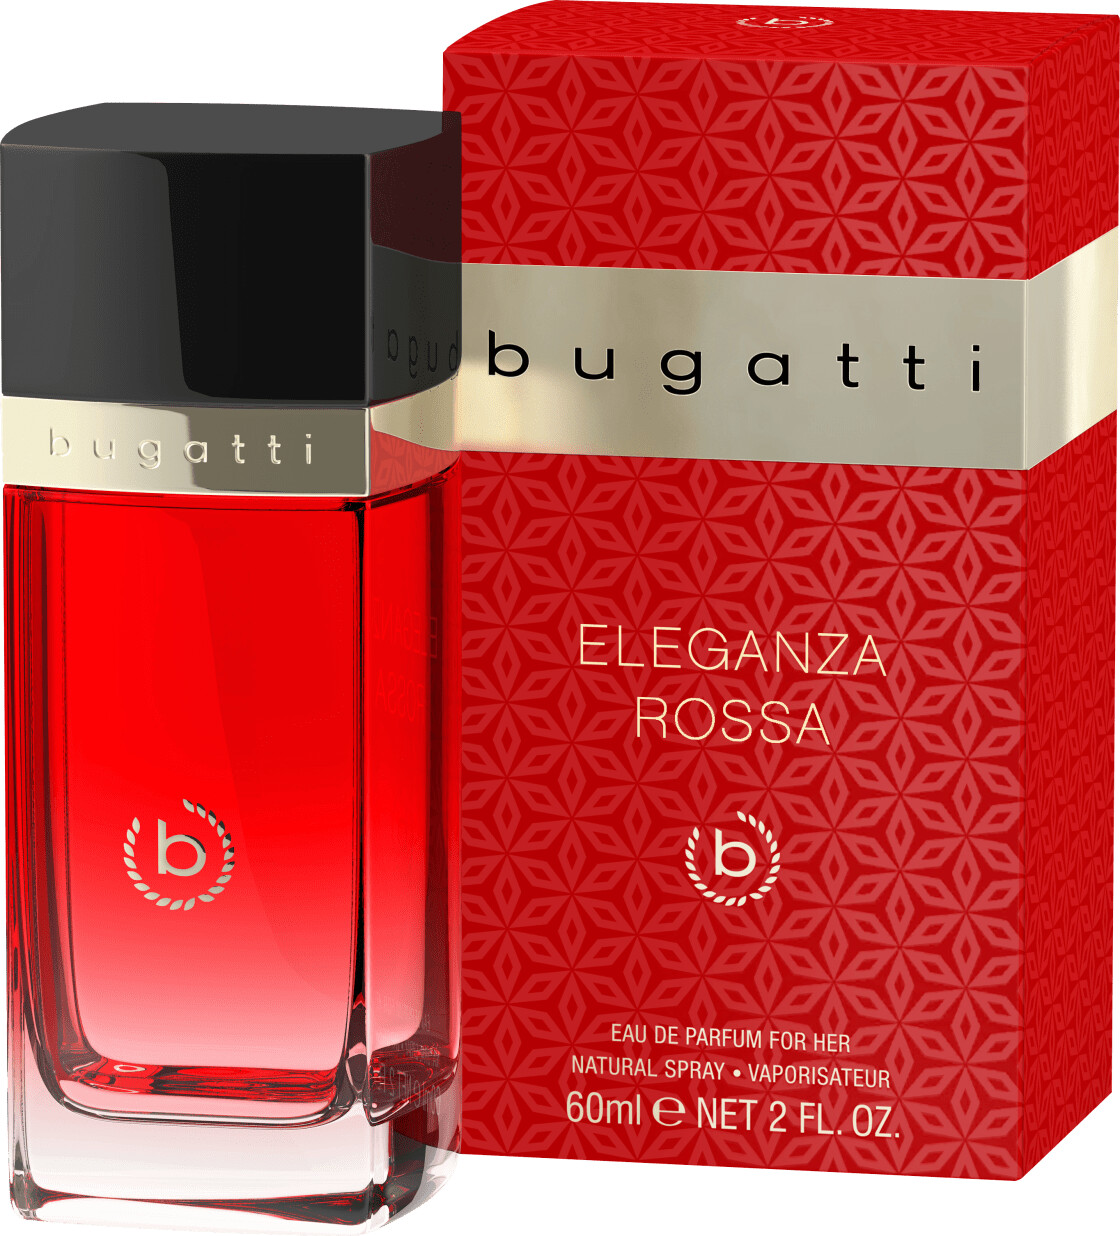 Bugatti Eleganza Rossa Eau de Parfum (60ml) ab 17,45 € | Preisvergleich bei